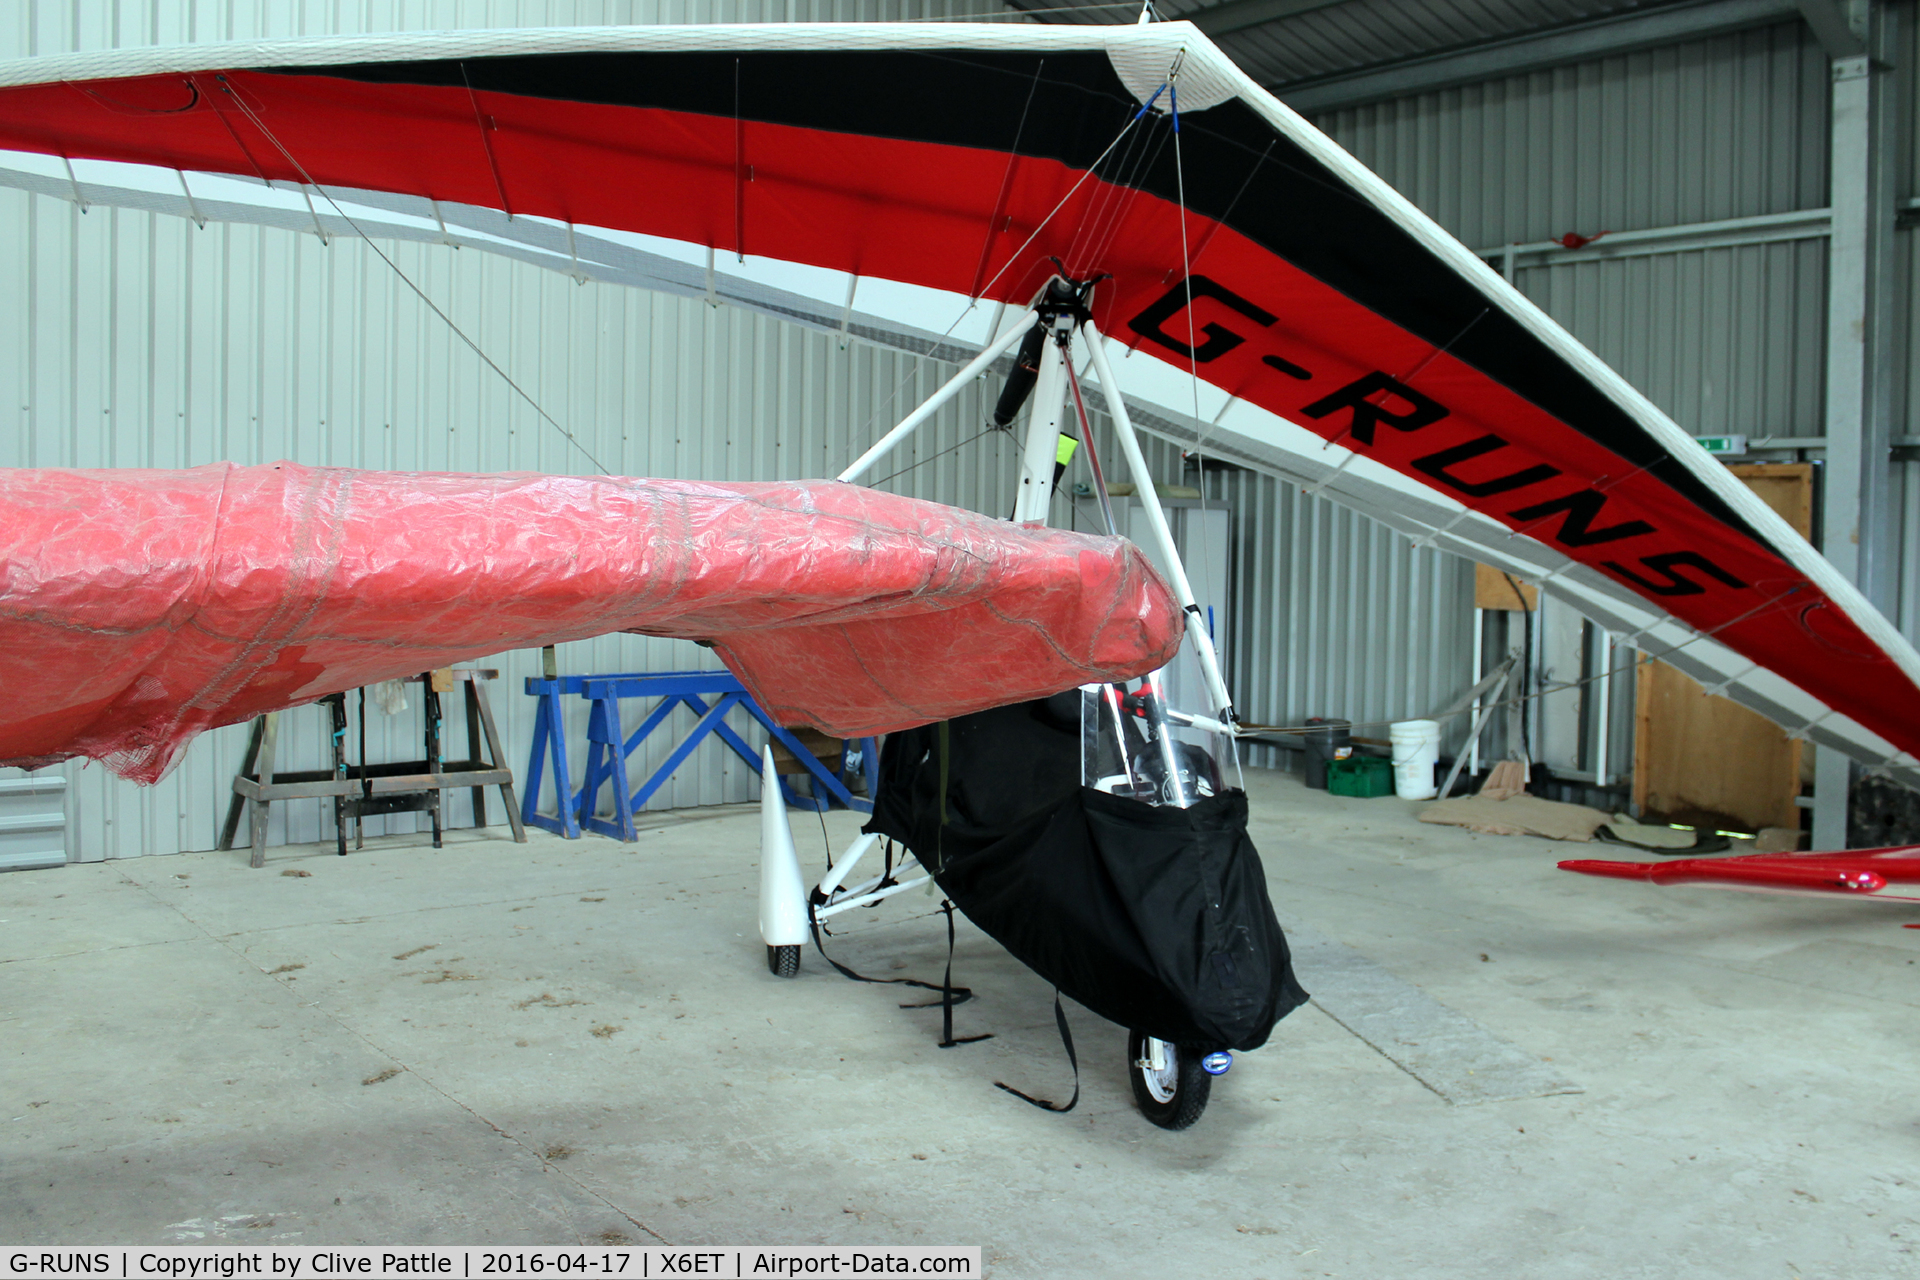 G-RUNS, 2012 P&M Aviation Quik GT450 C/N 8624, Hangared at Easterton Gliding field, Elgin, Moray.